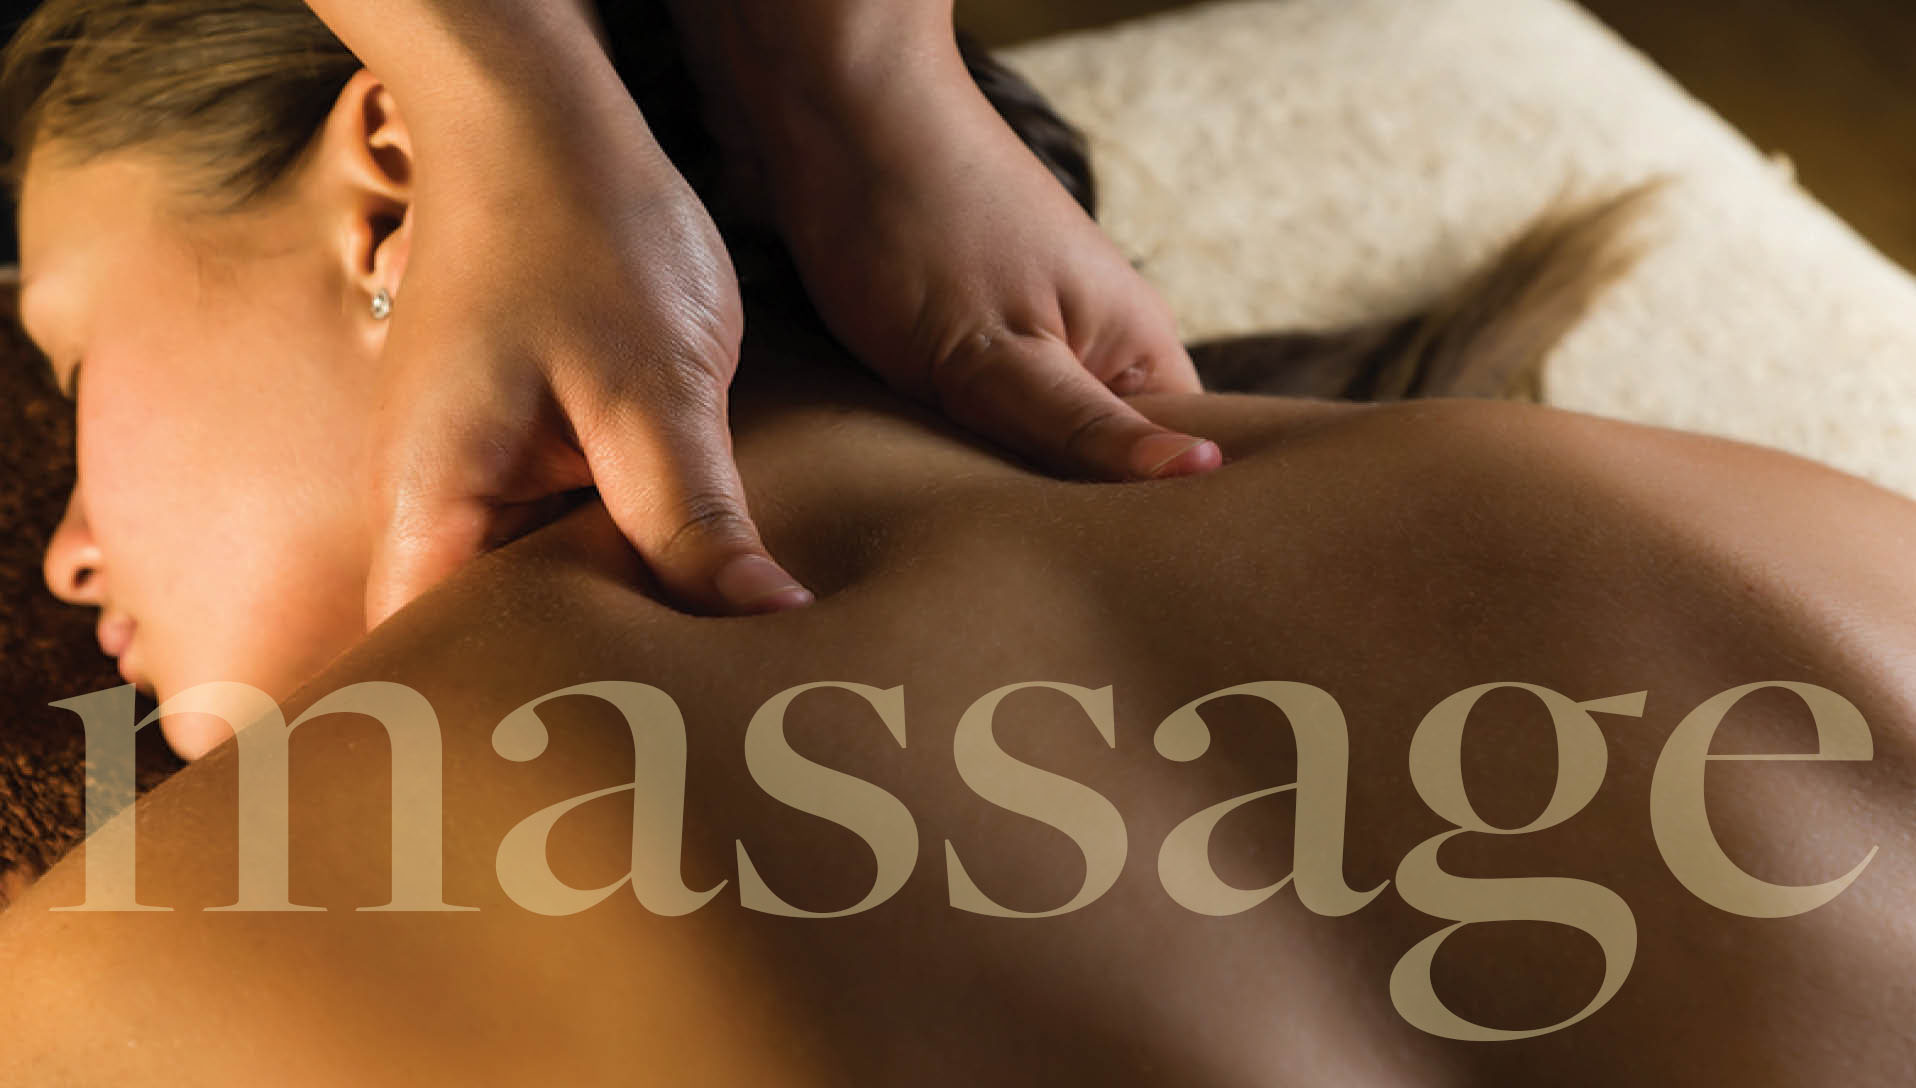 Spa West Massage Services